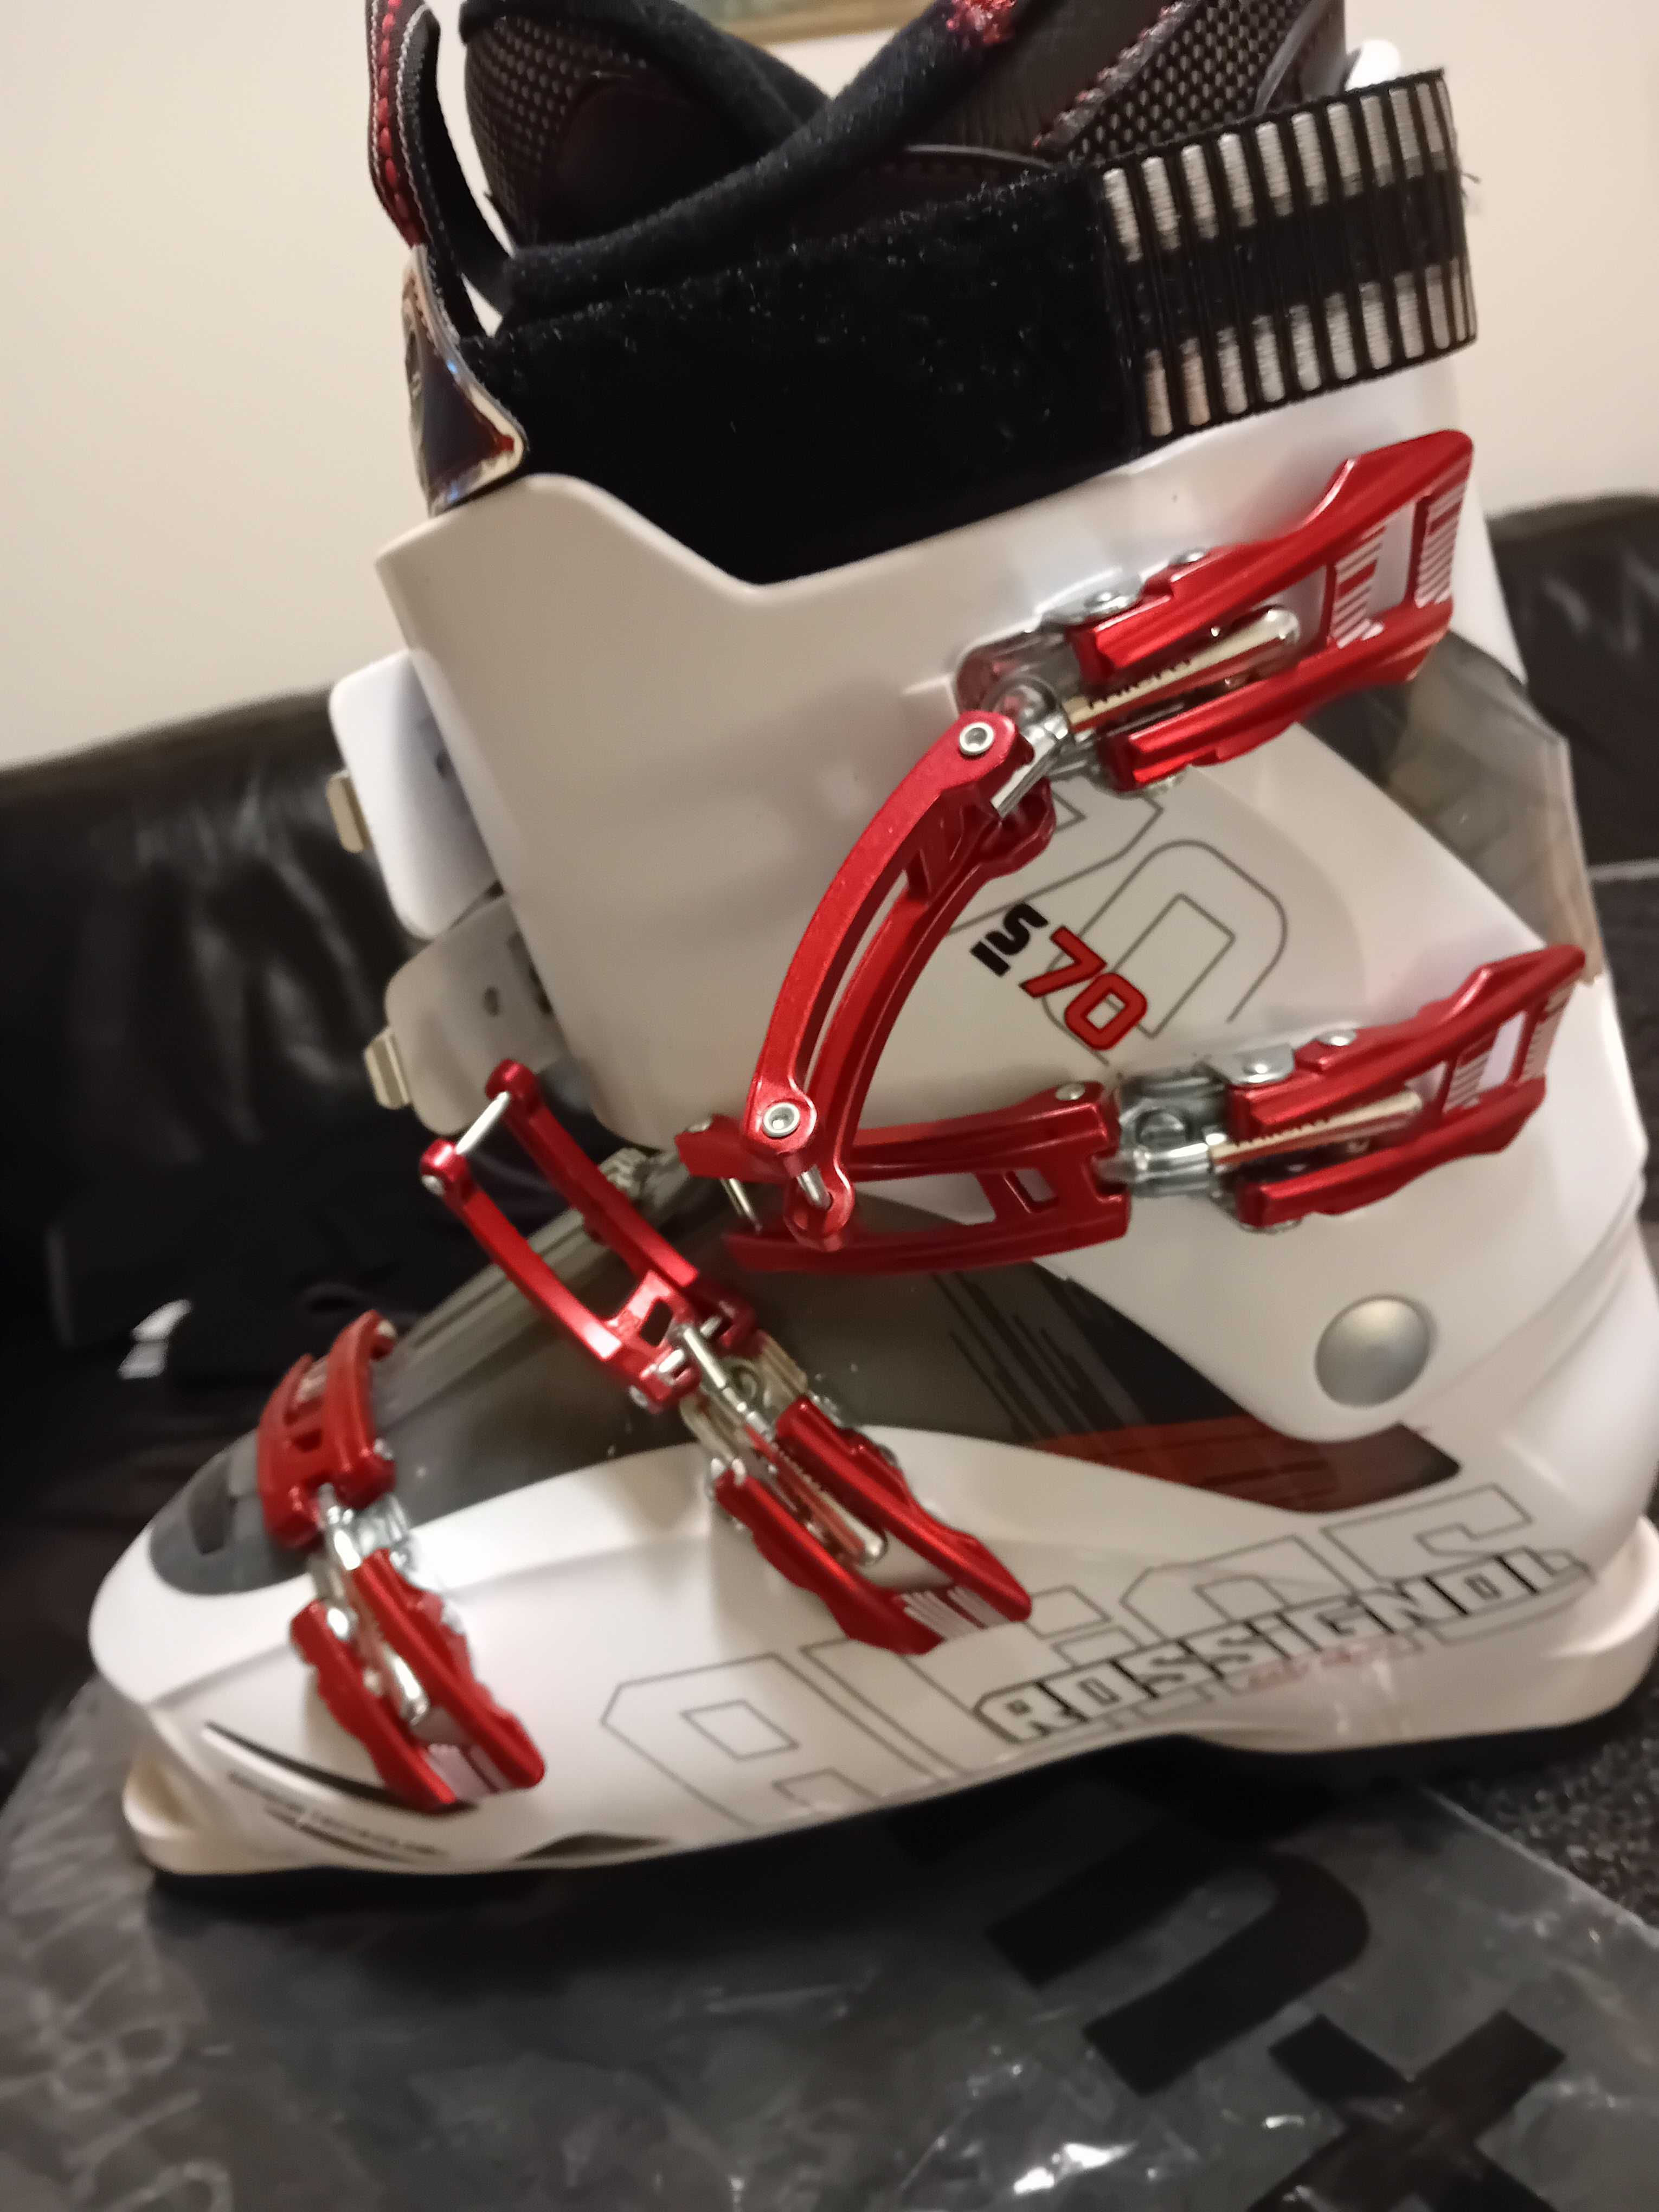 Ски Rossignol, автомати Rossignol, ски обувки,щеки,калъф за ски.